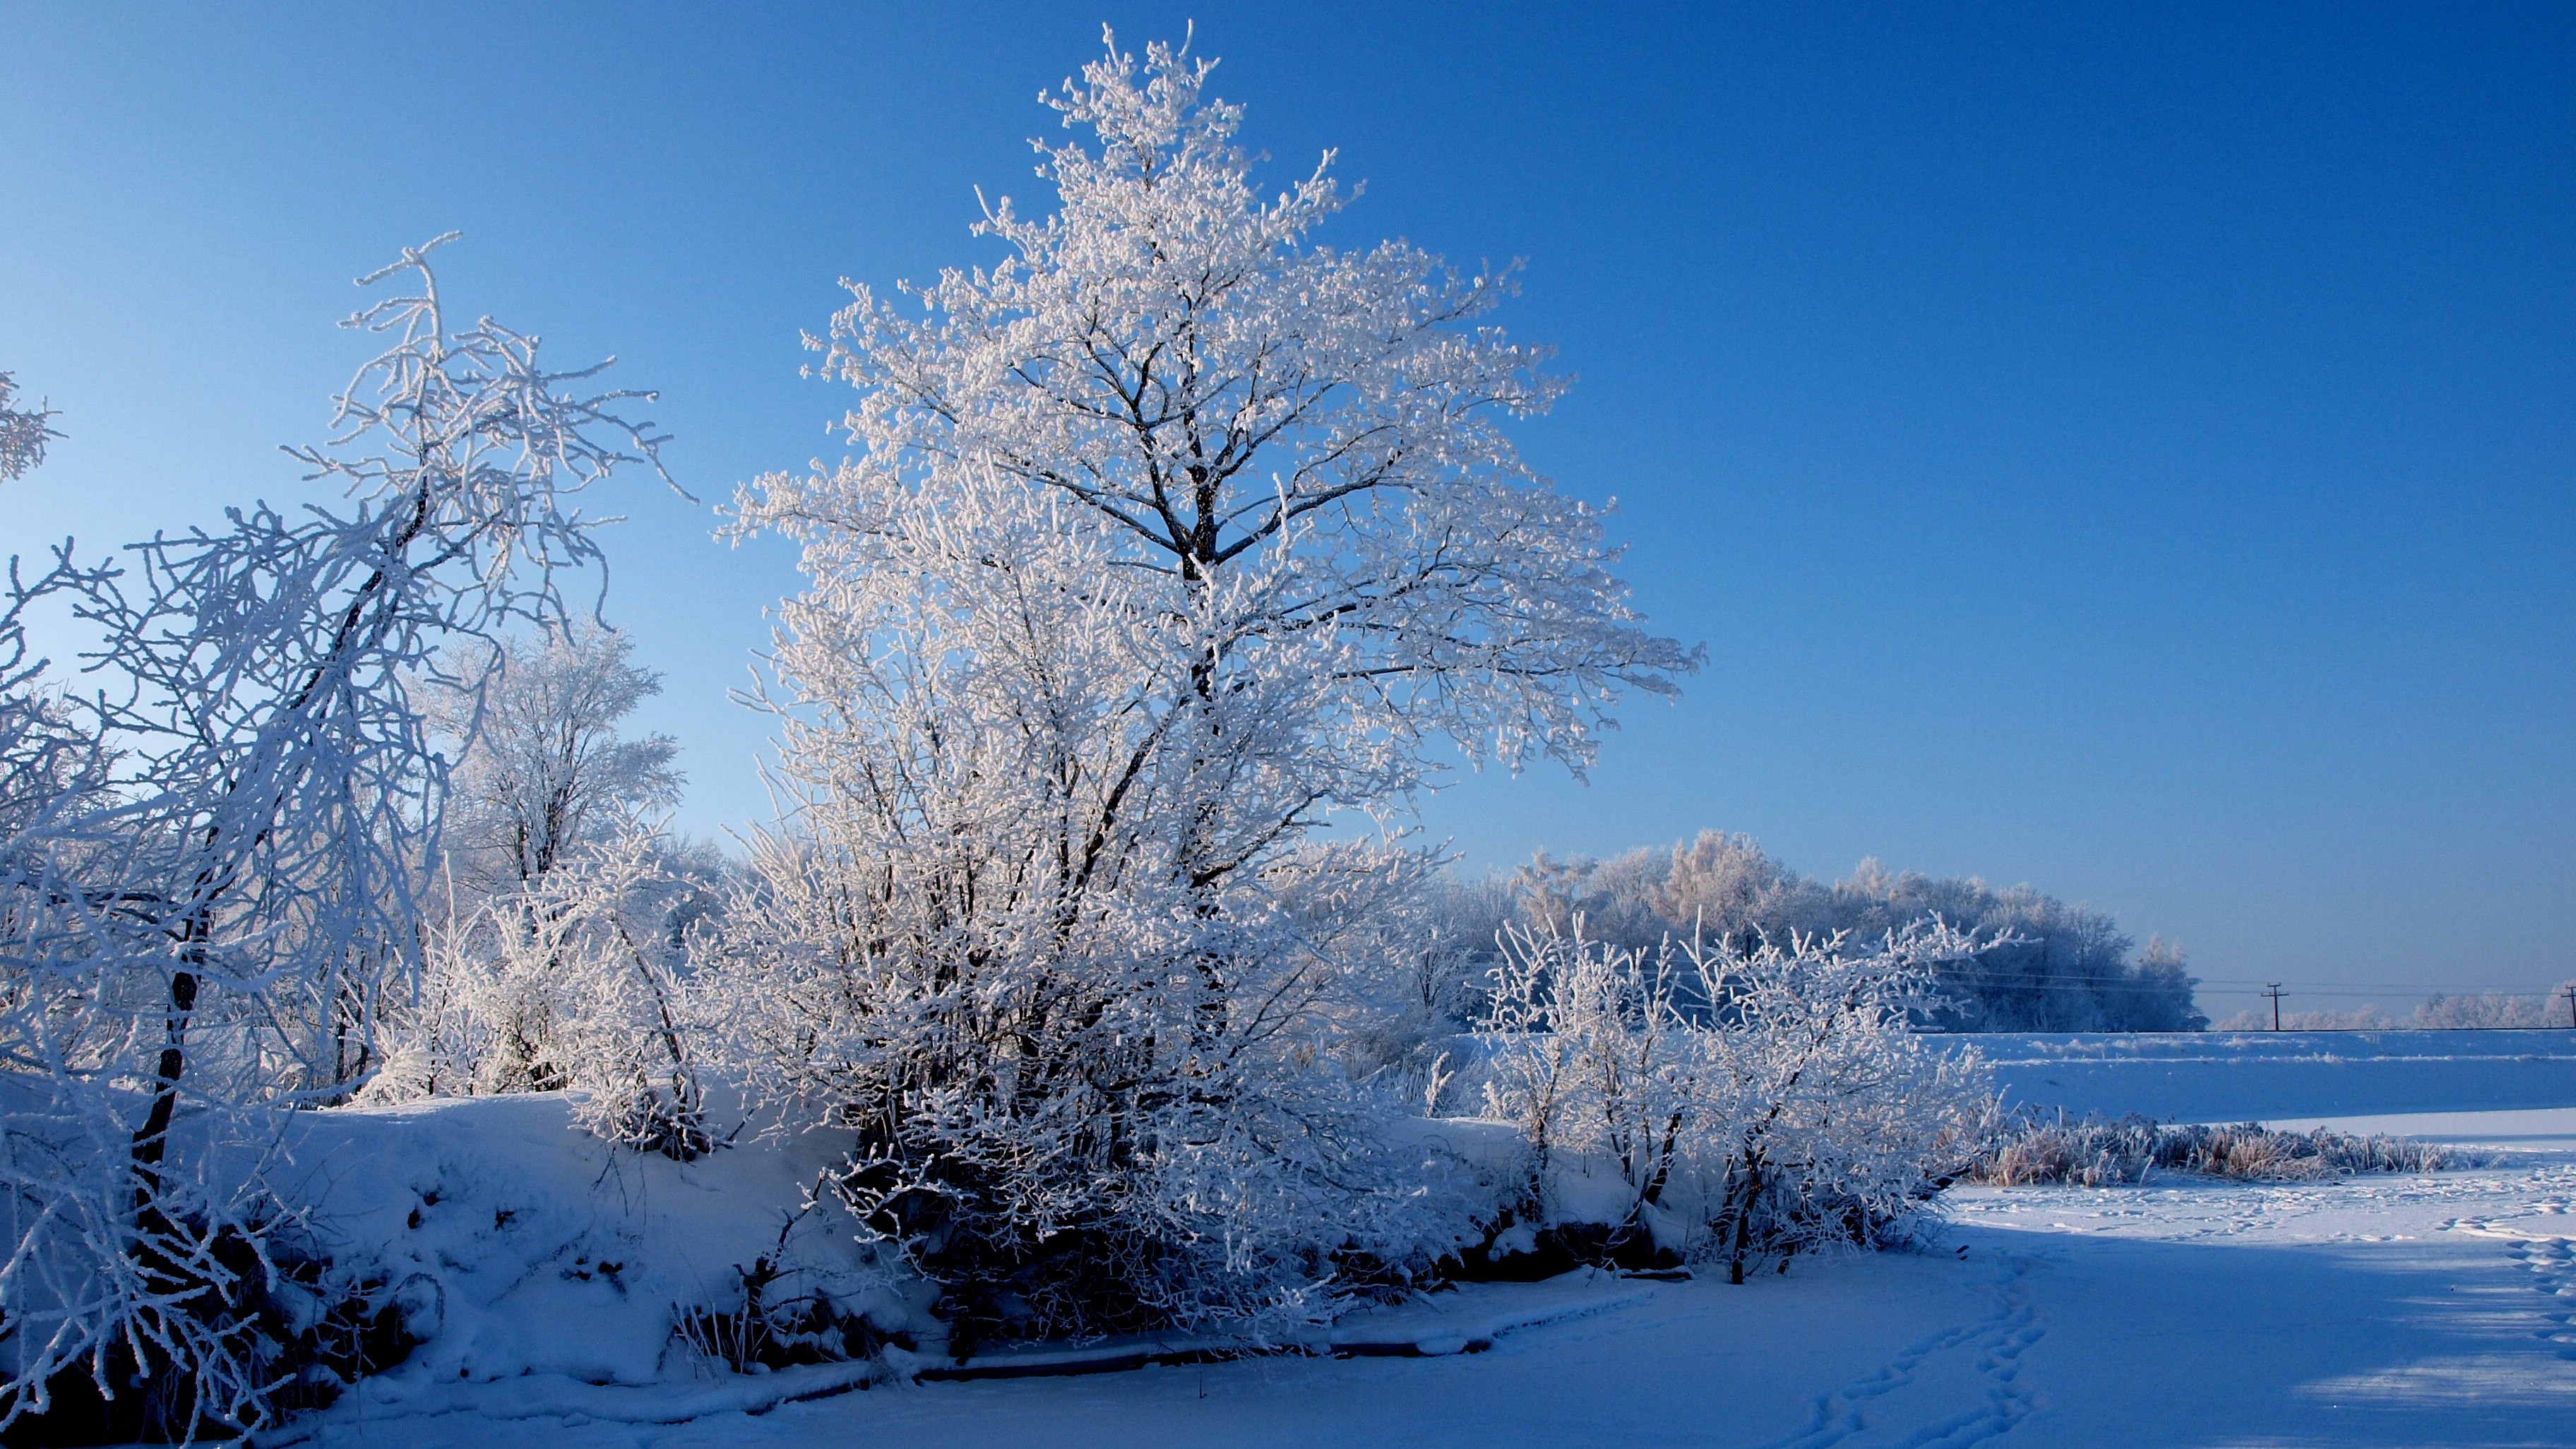 General 3648x2052 winter landscape snow clear sky sky blue sky blue frost trees